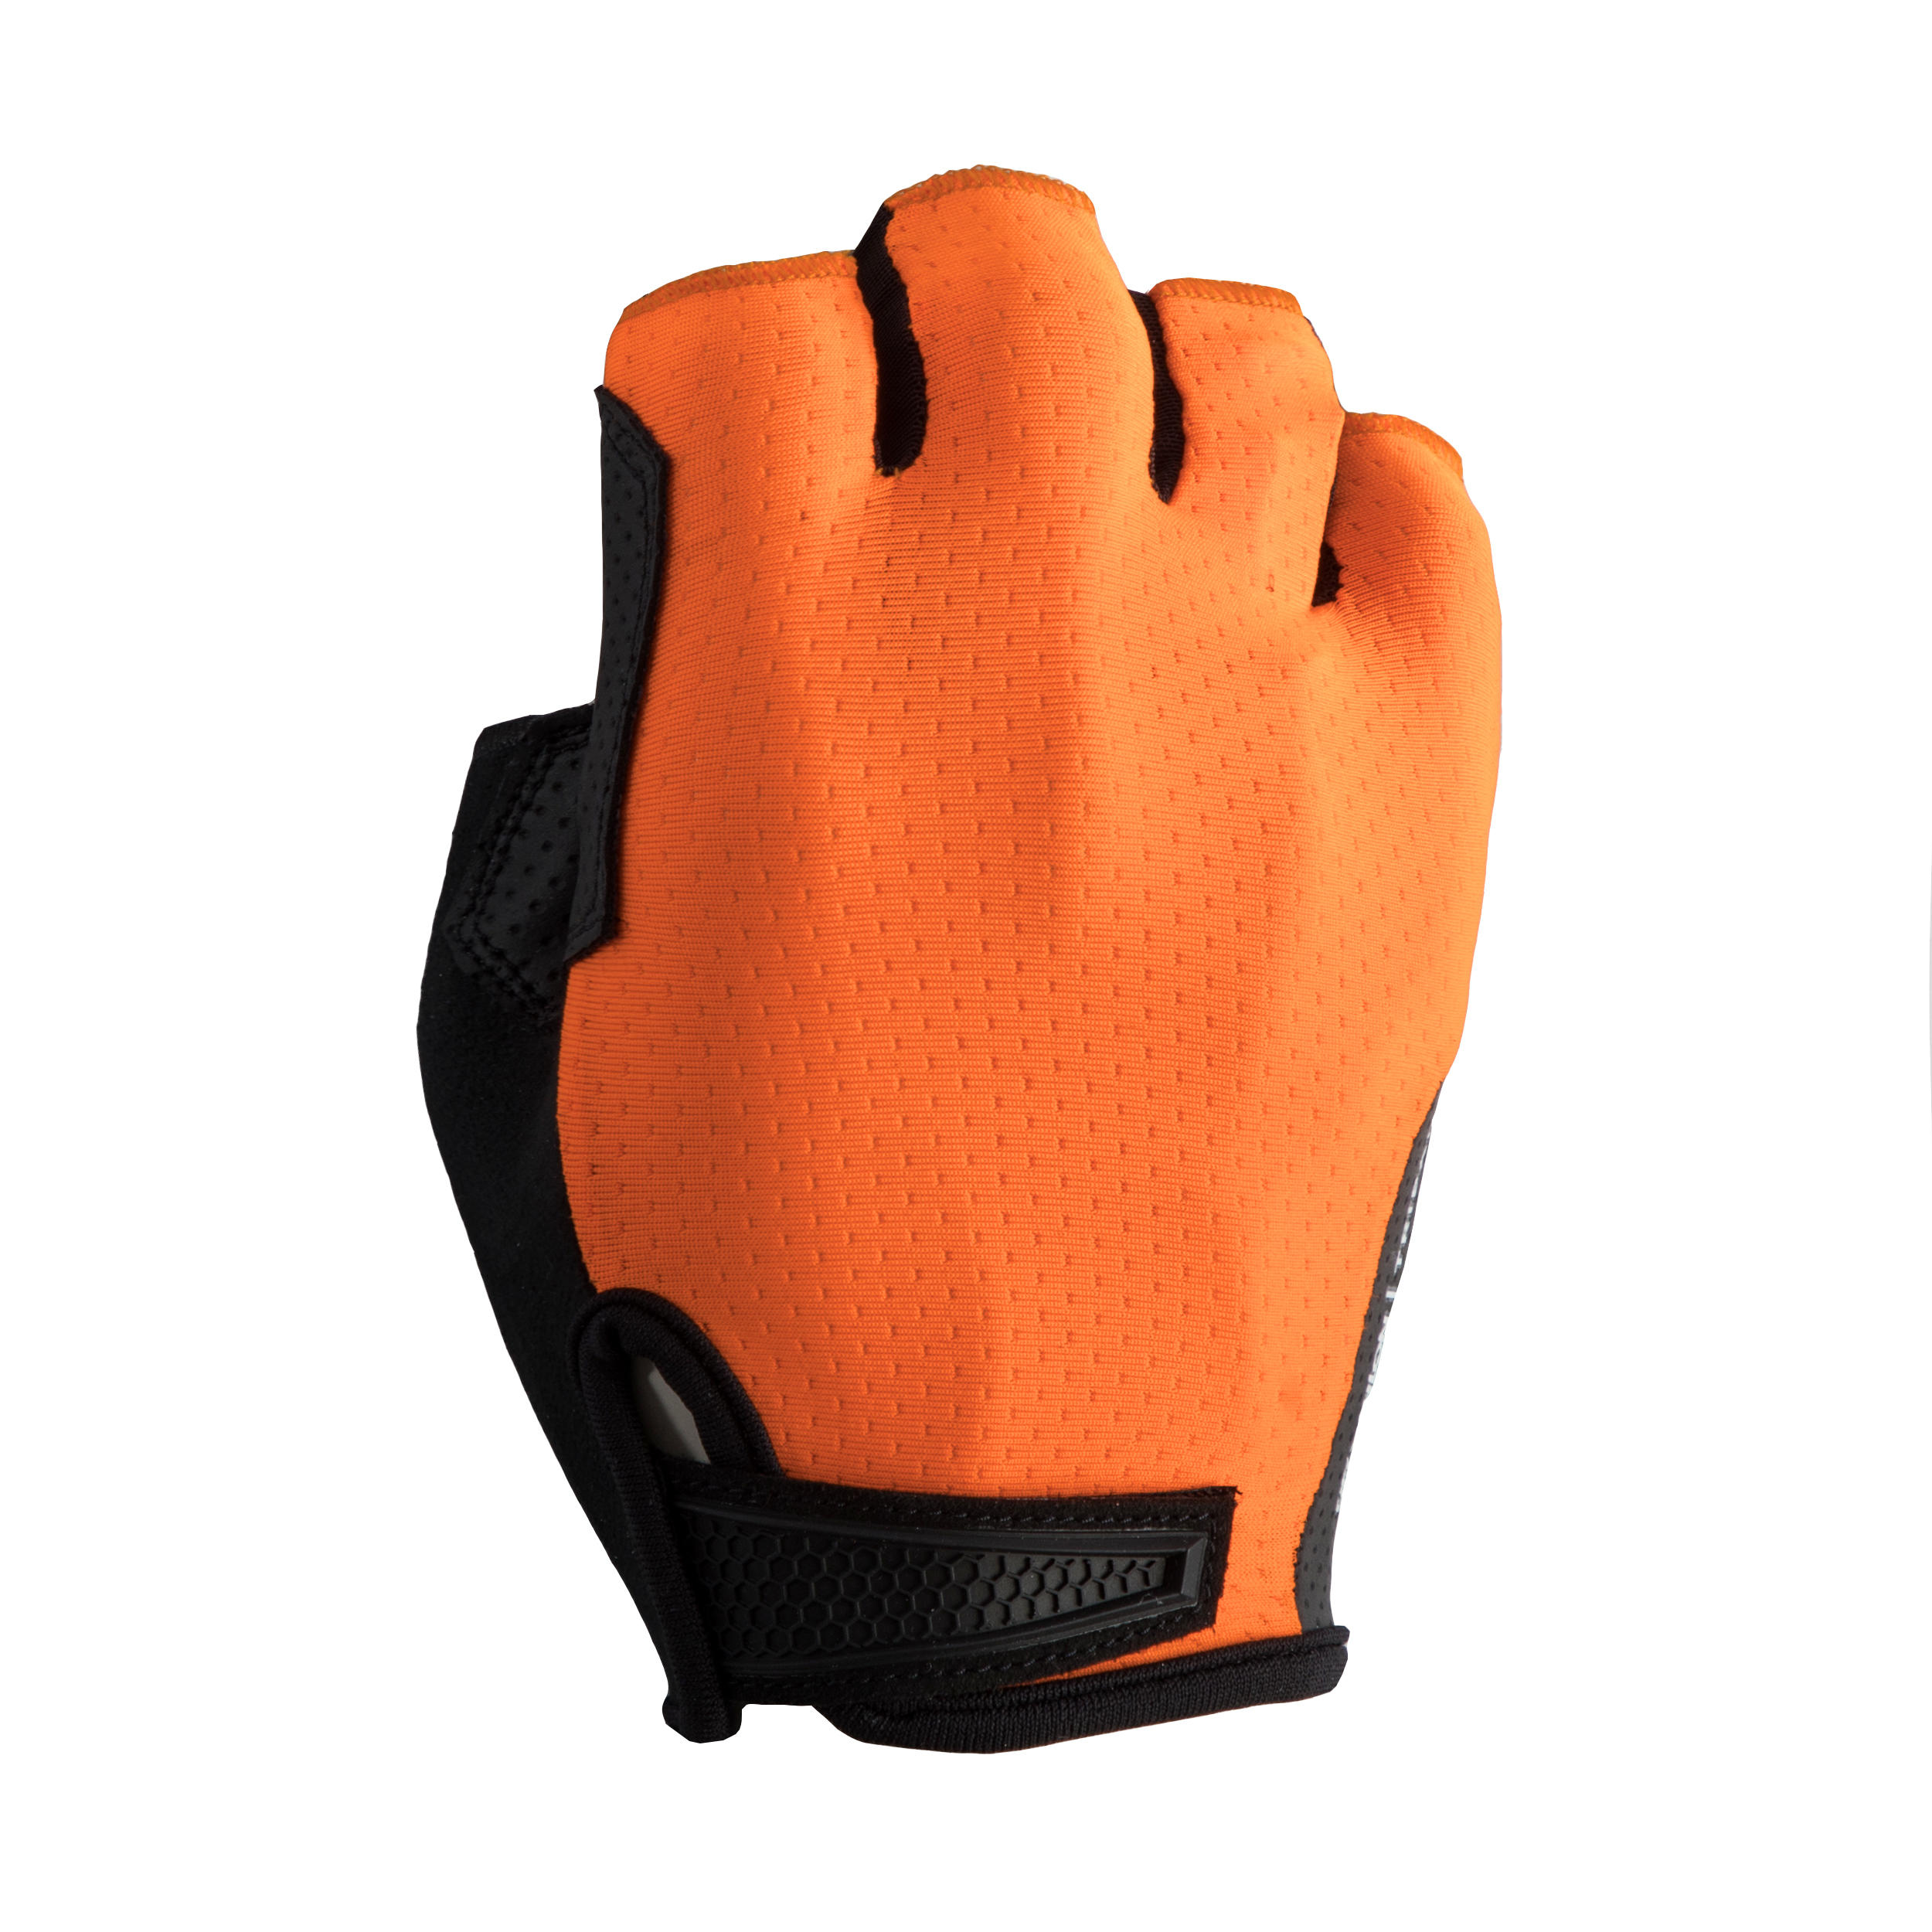 VAN RYSEL RoadCycling 900 Cycling Gloves - Neon Orange